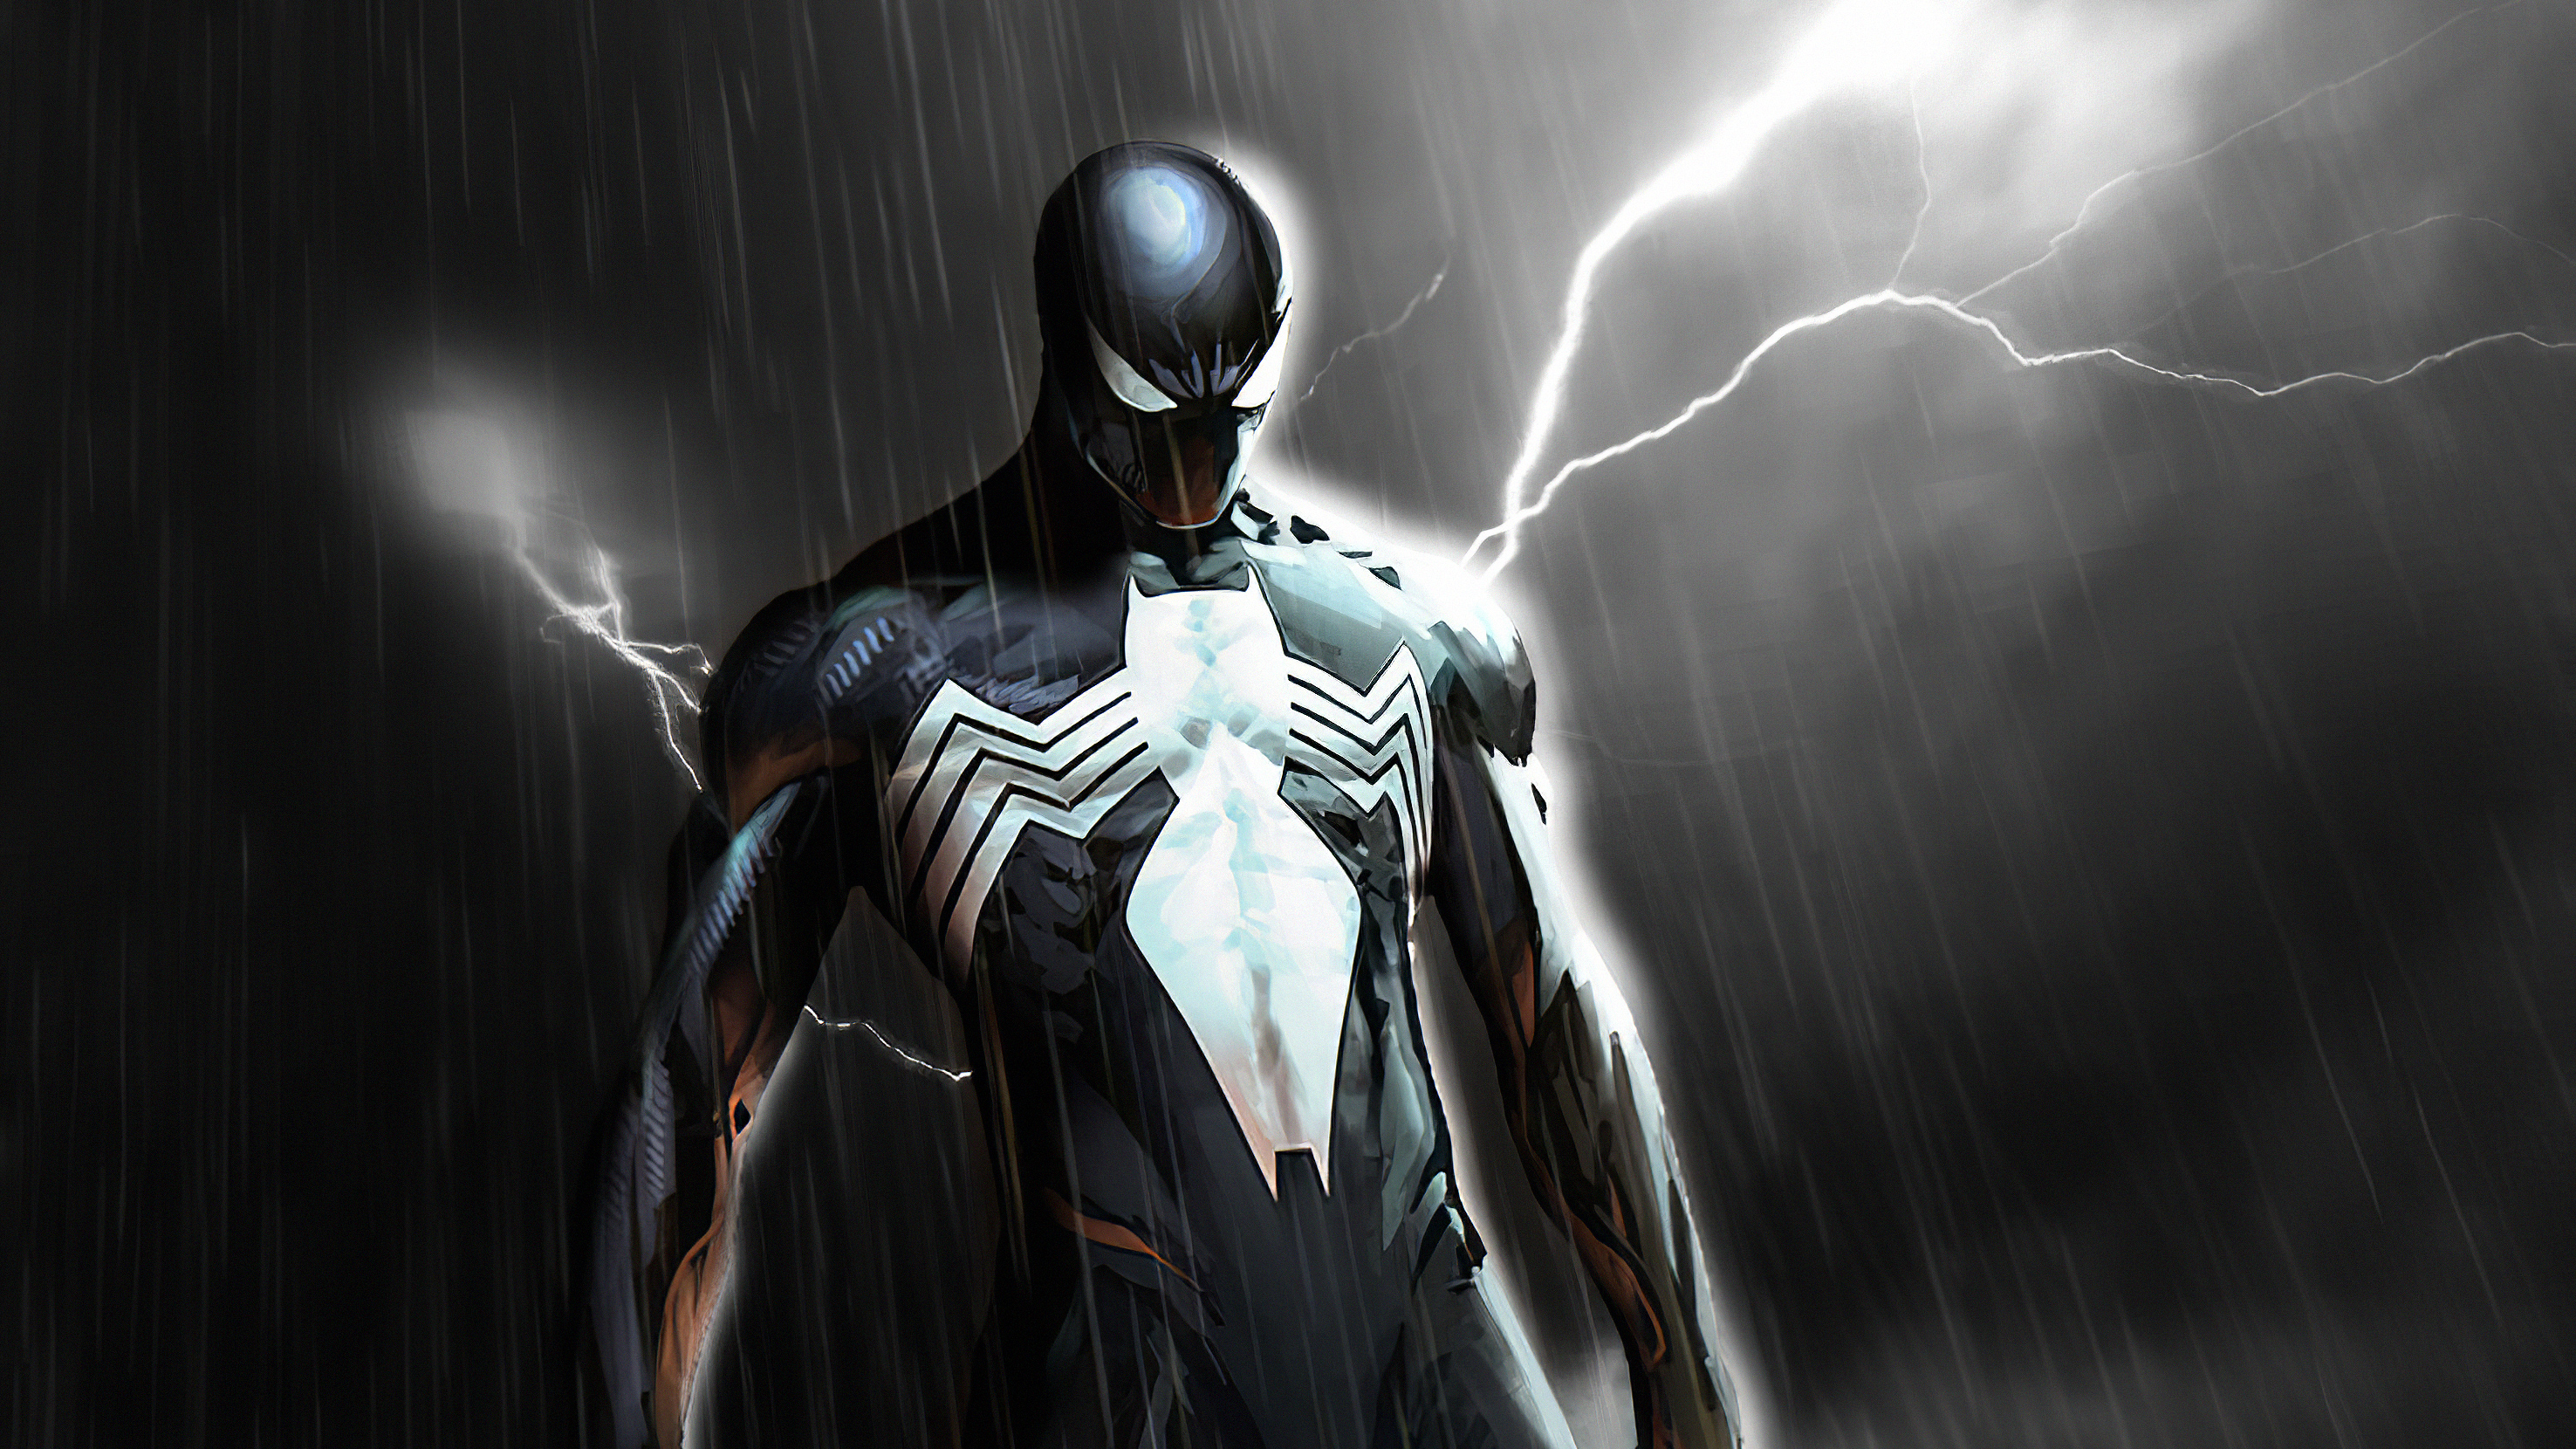 Spiderman Venom, HD Superheroes, 4k Wallpapers, Image, Backgrounds, Photos ...